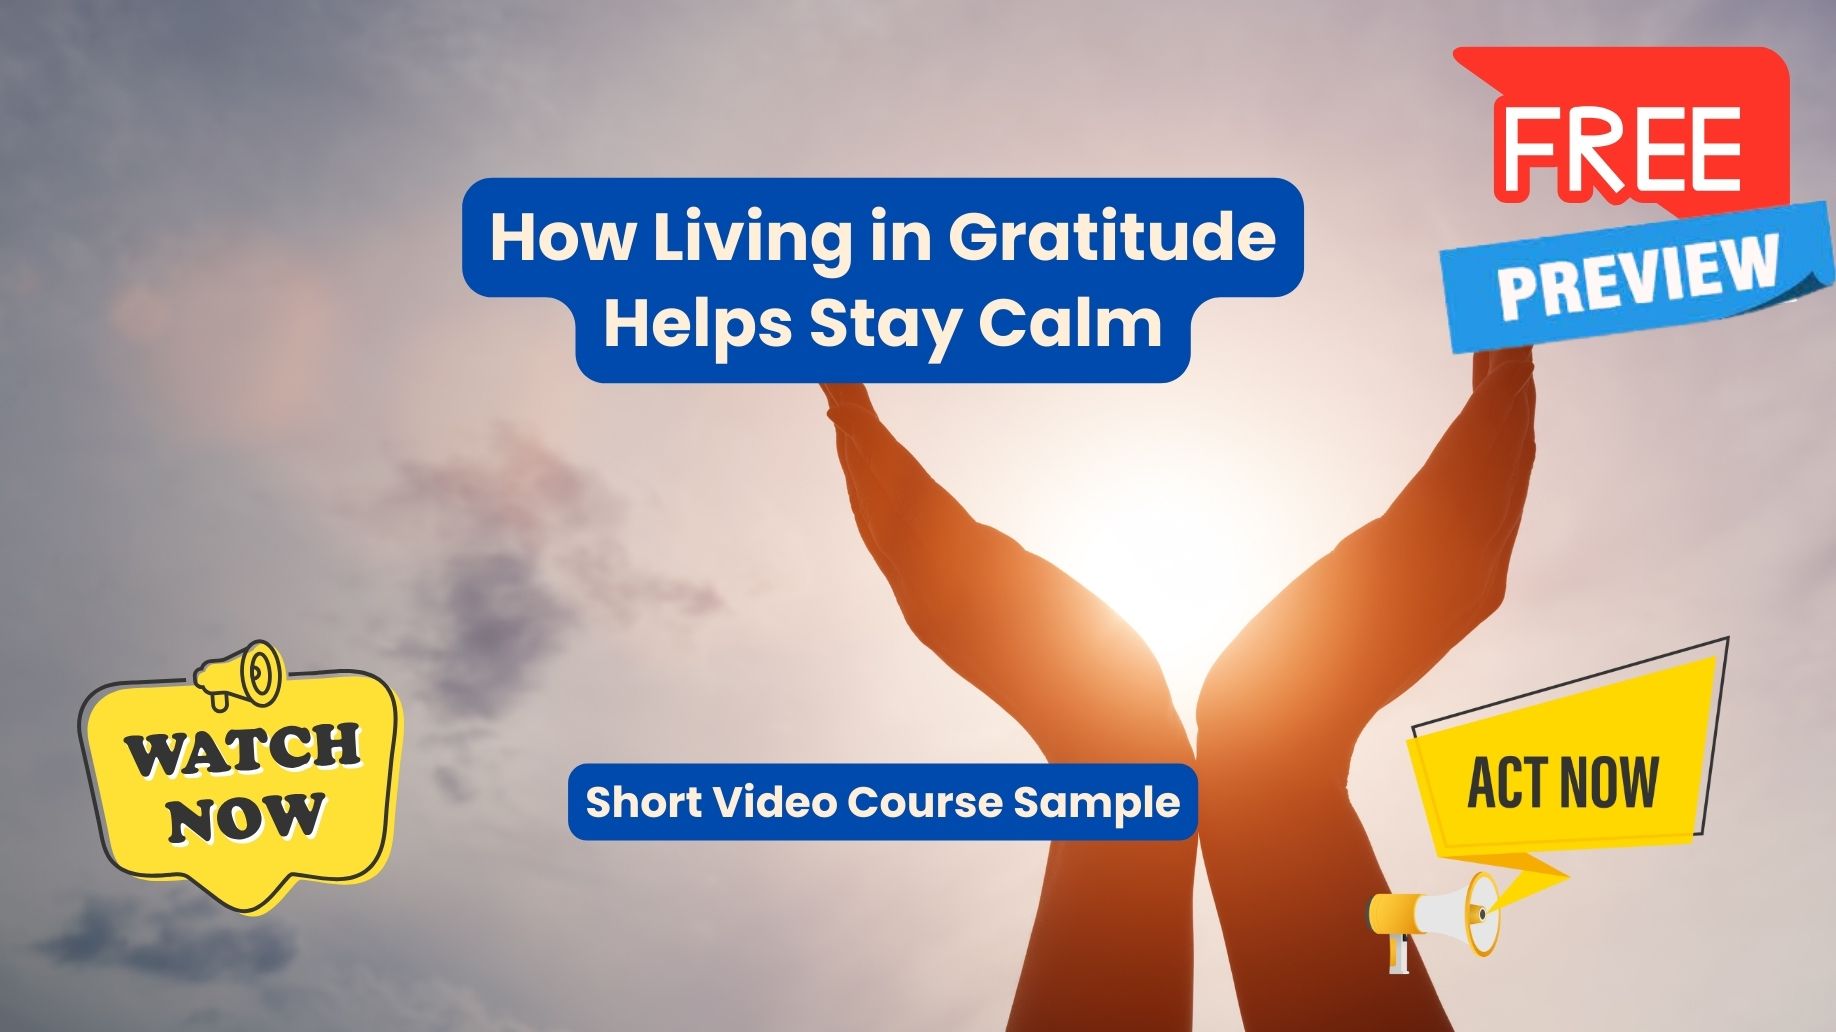 Gratitude helps reduce stress